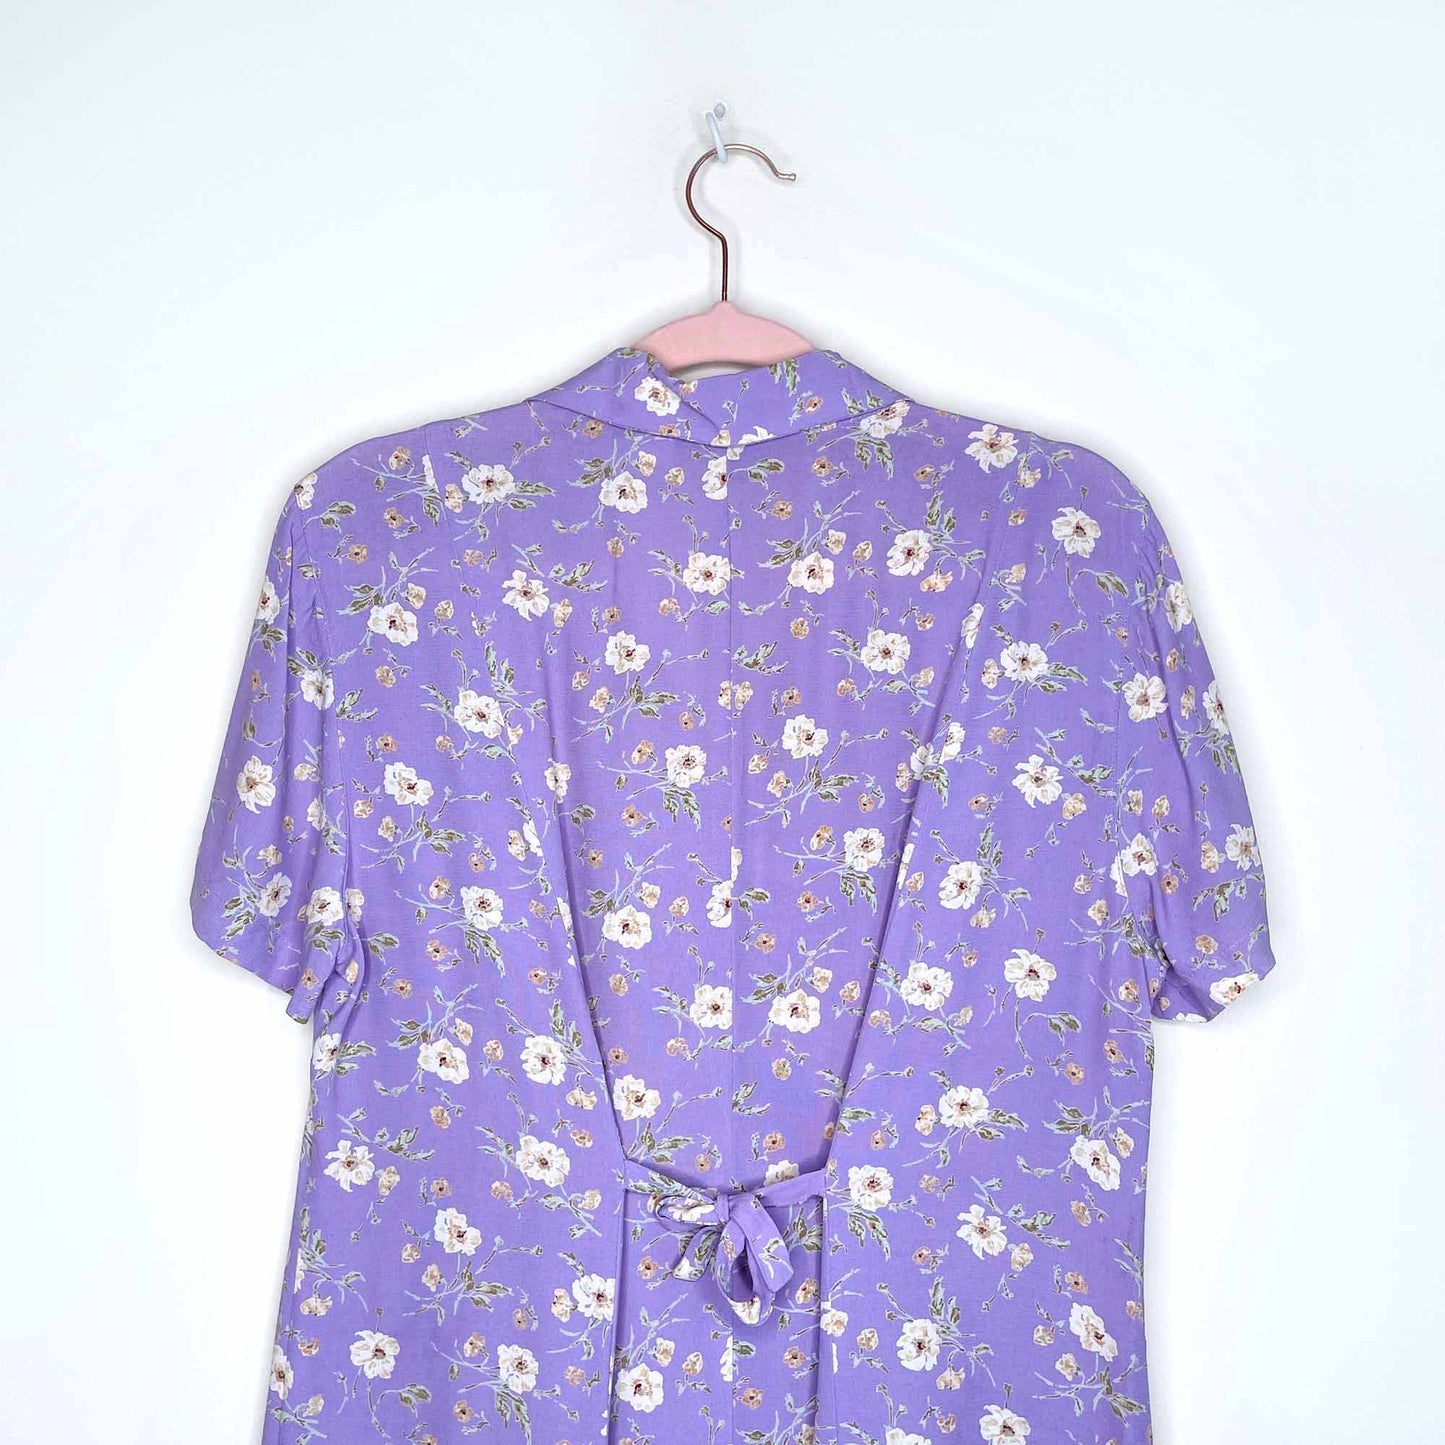 vintage 90's gap floral shirt dress - size small